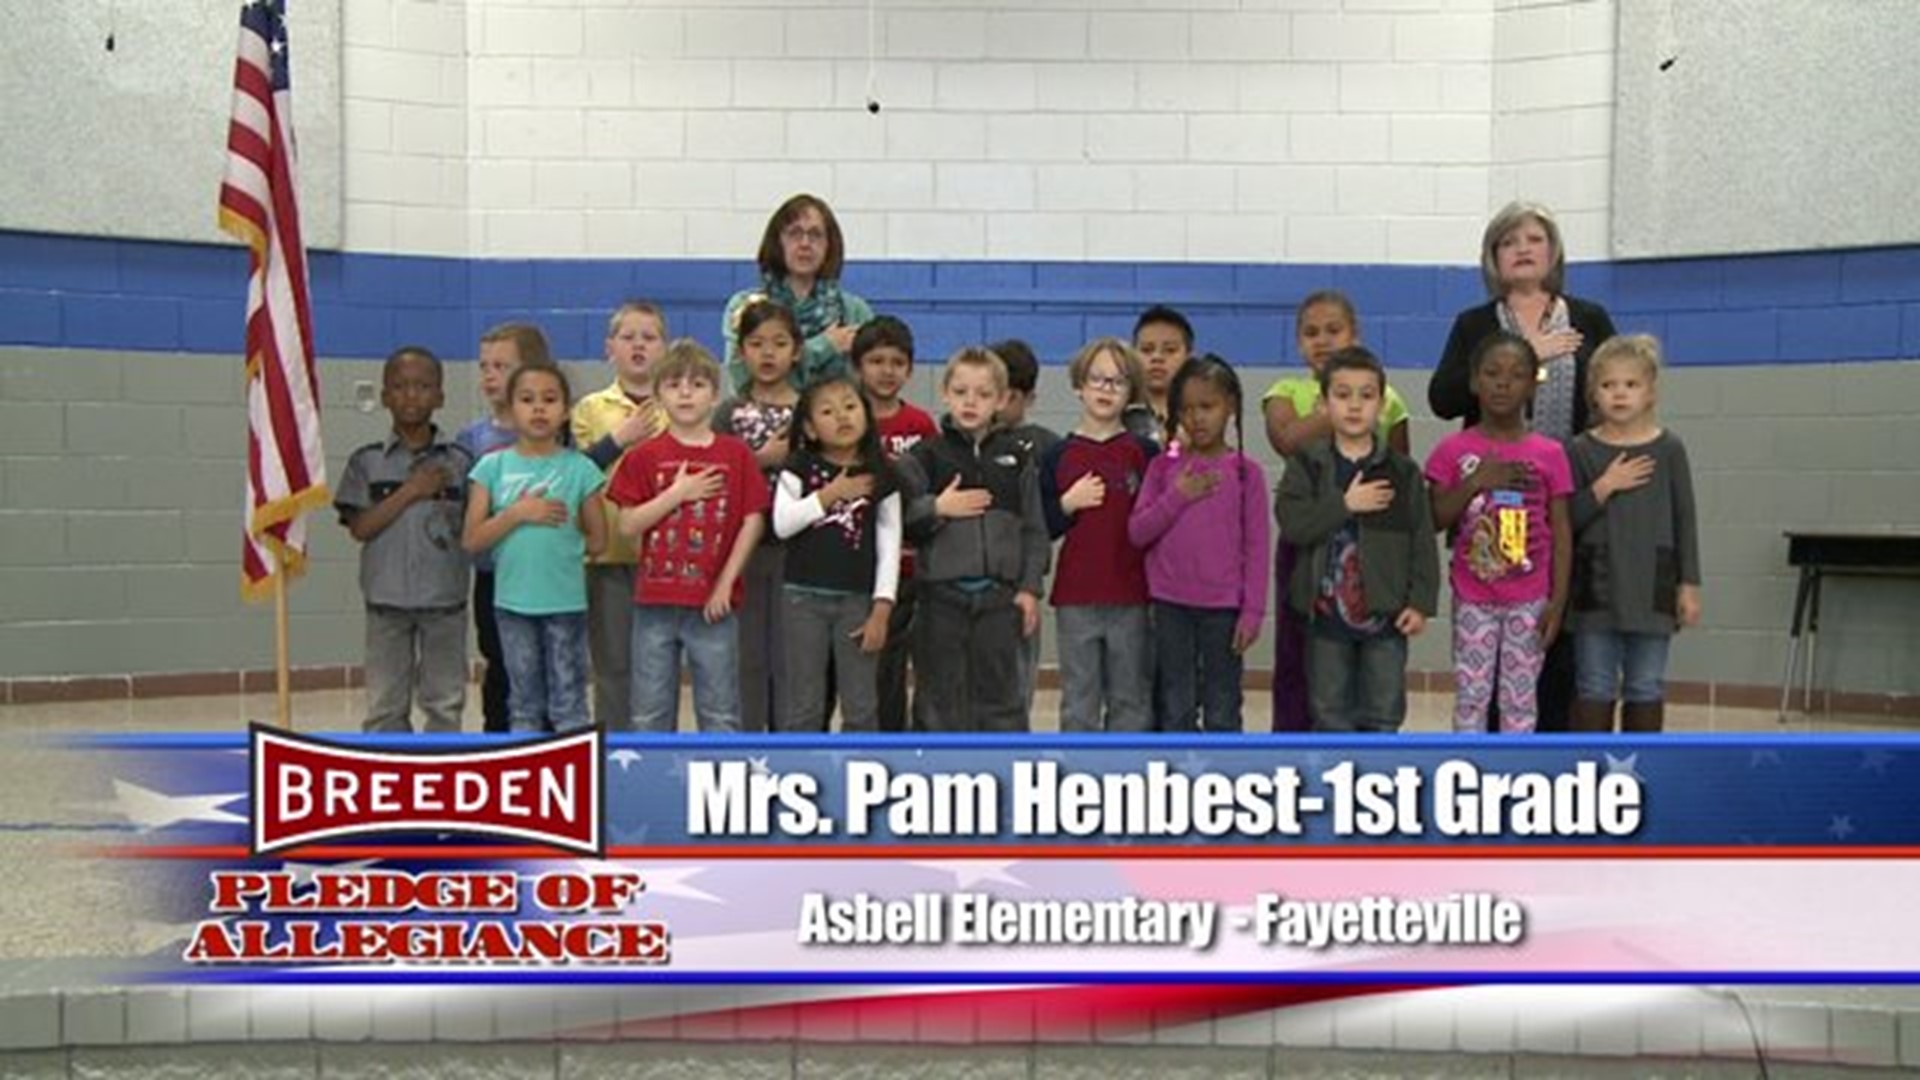 Asbell Elementary - Fayetteville, Mrs. Henbest - First Grade